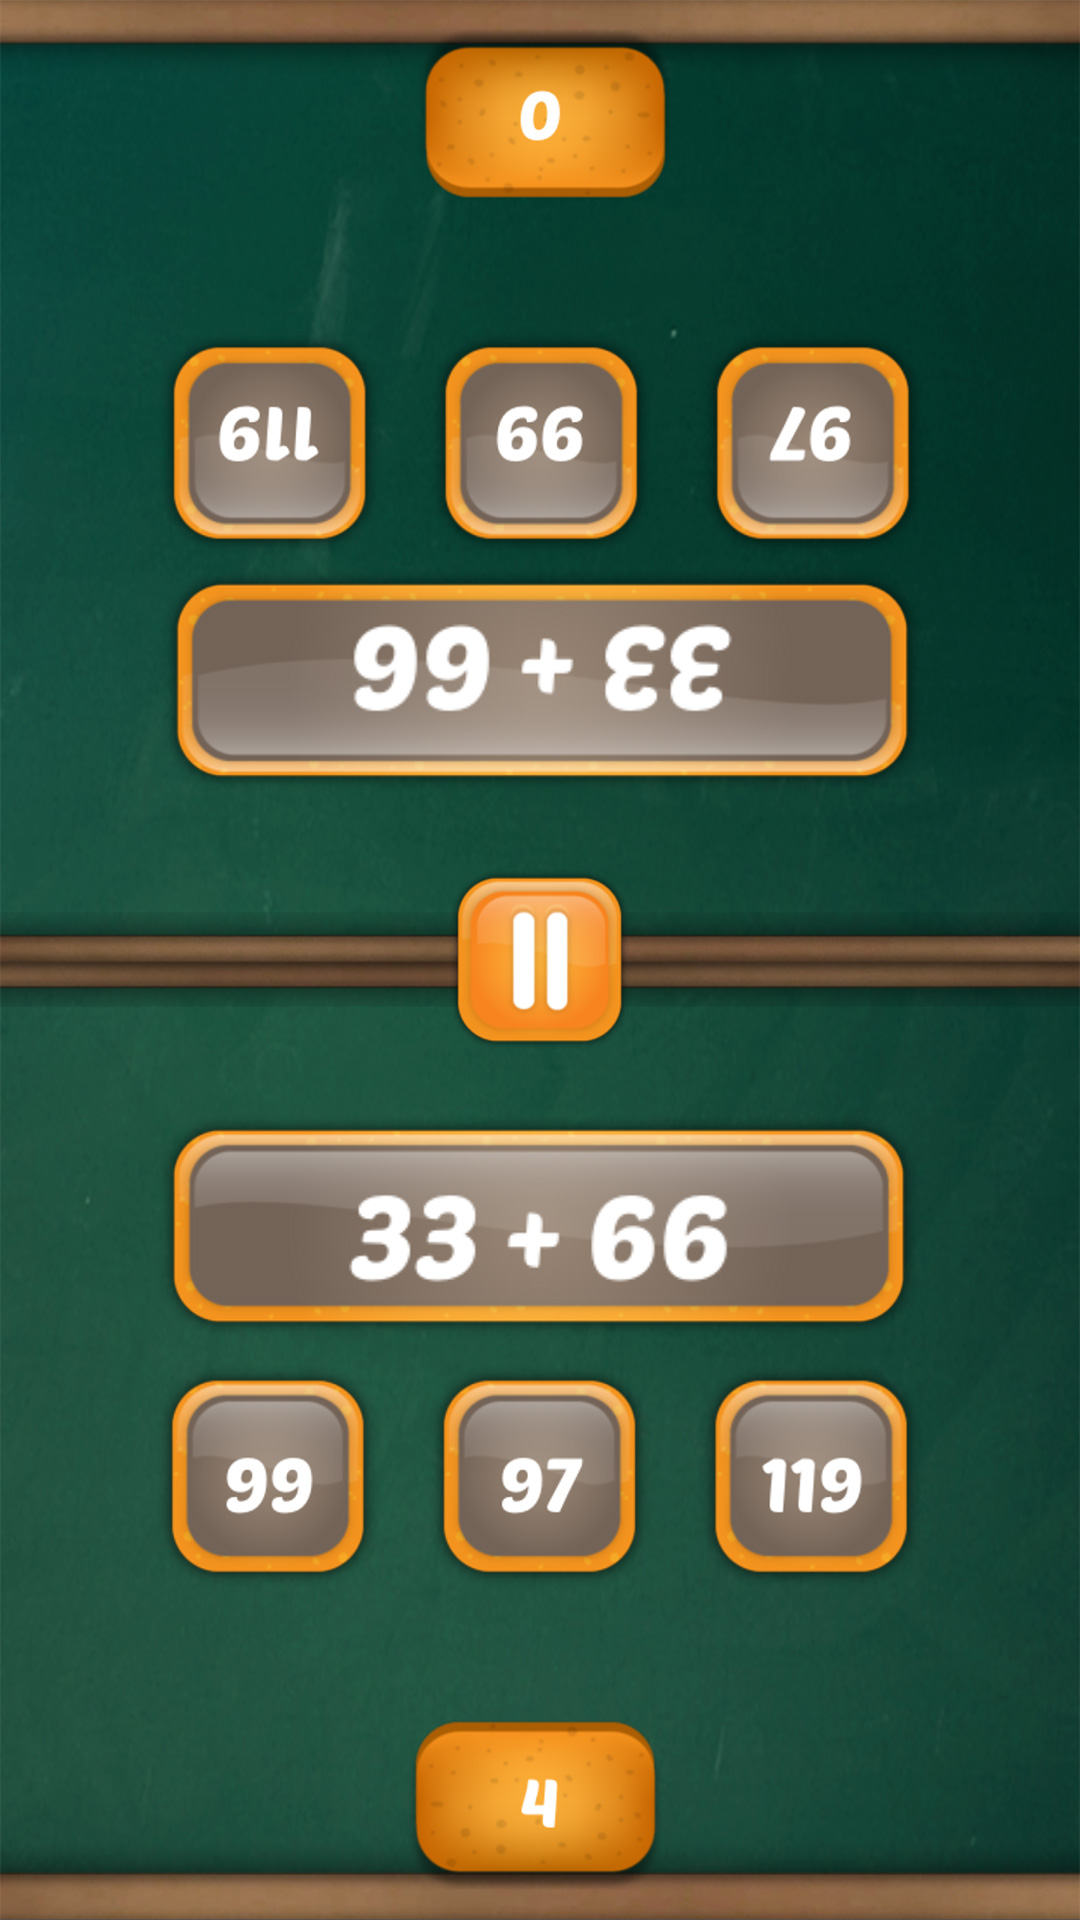 Android application Math Duel: 2 Player Math Game screenshort